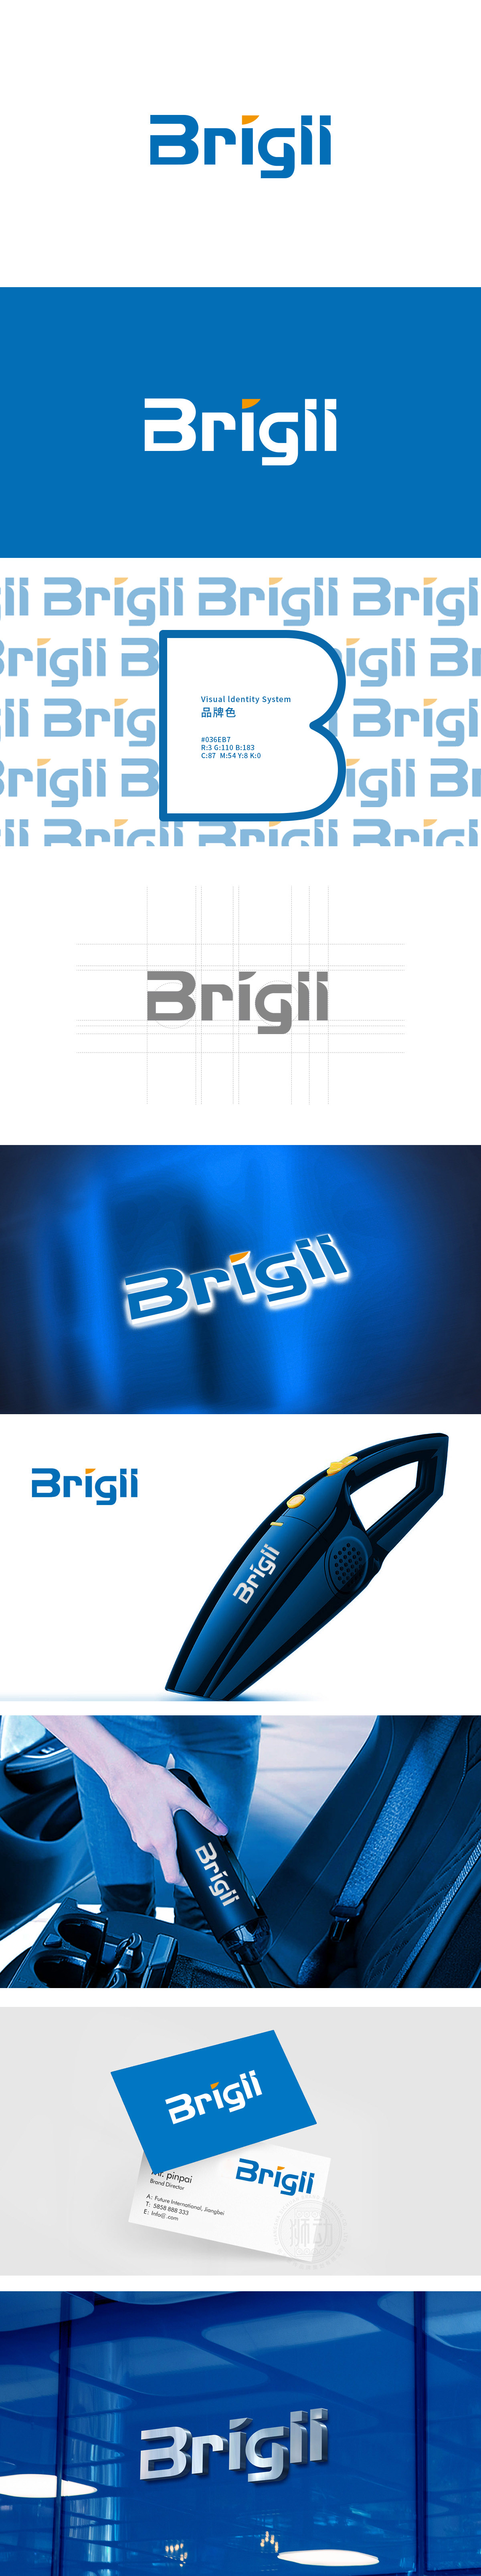 brigii	电子/家电产品	LOGO设计